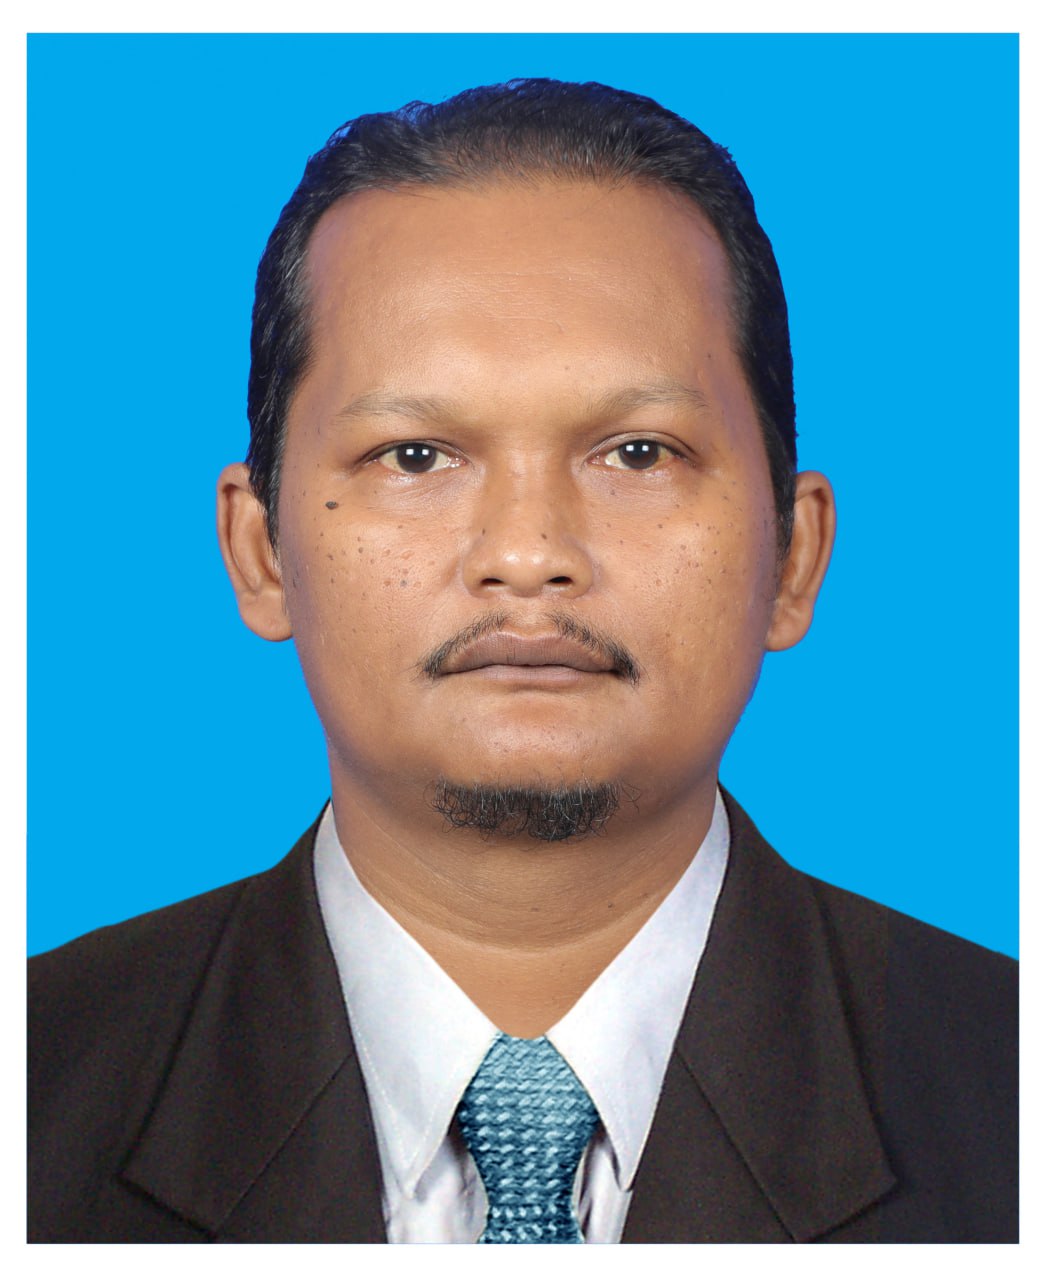  Mohd Fadzly bin Hamzah